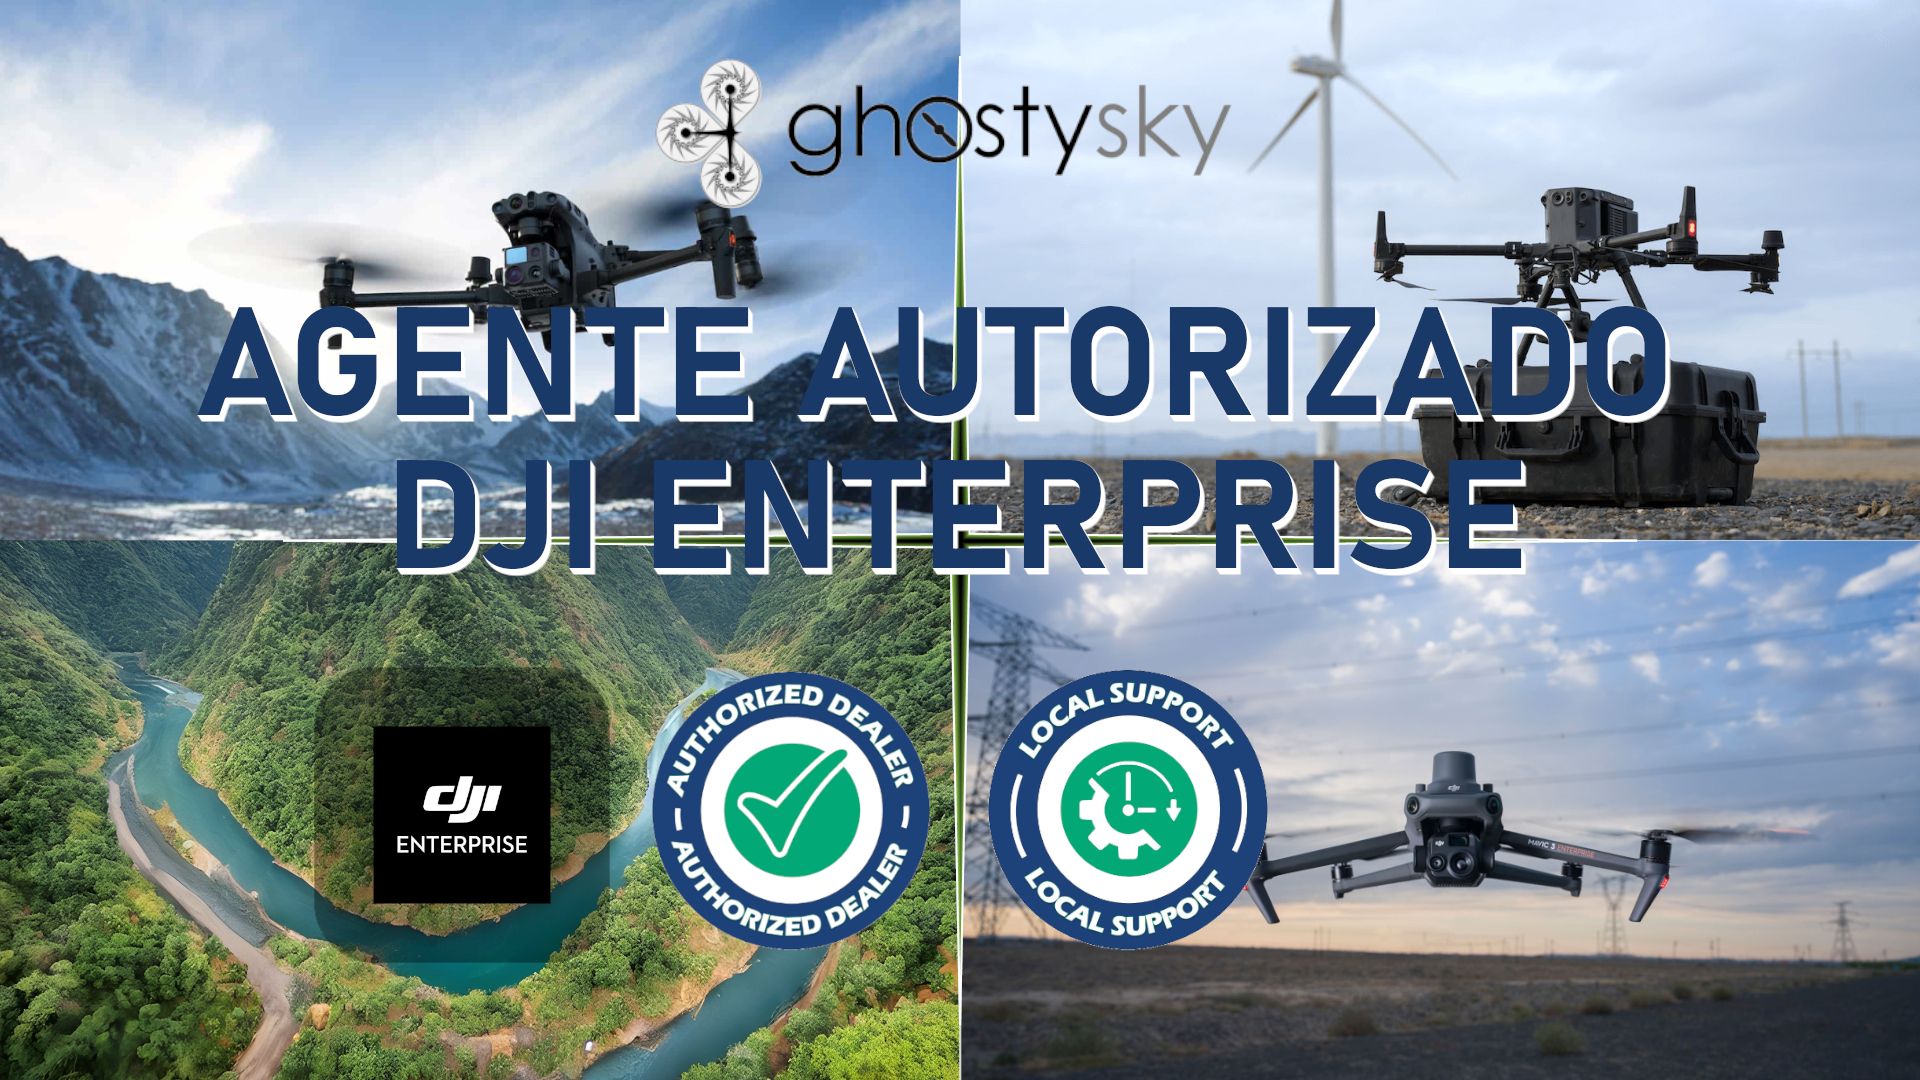 ¡Ghostysky es revendedor autorizado DJI Enterprise!